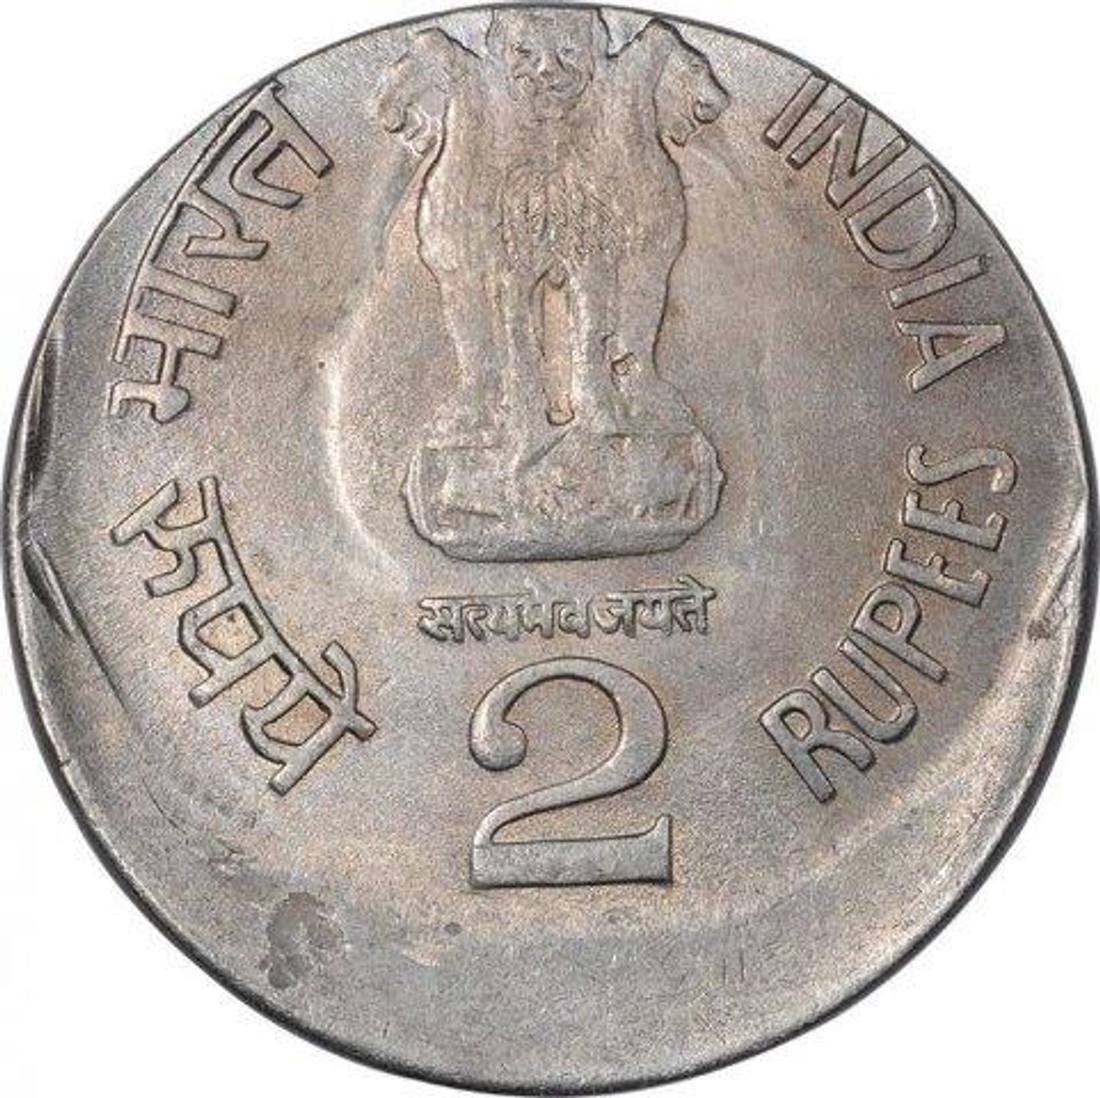 Cupro Nickle Error Two Rupees Coin of Sardar Vallabhbhai Patel.